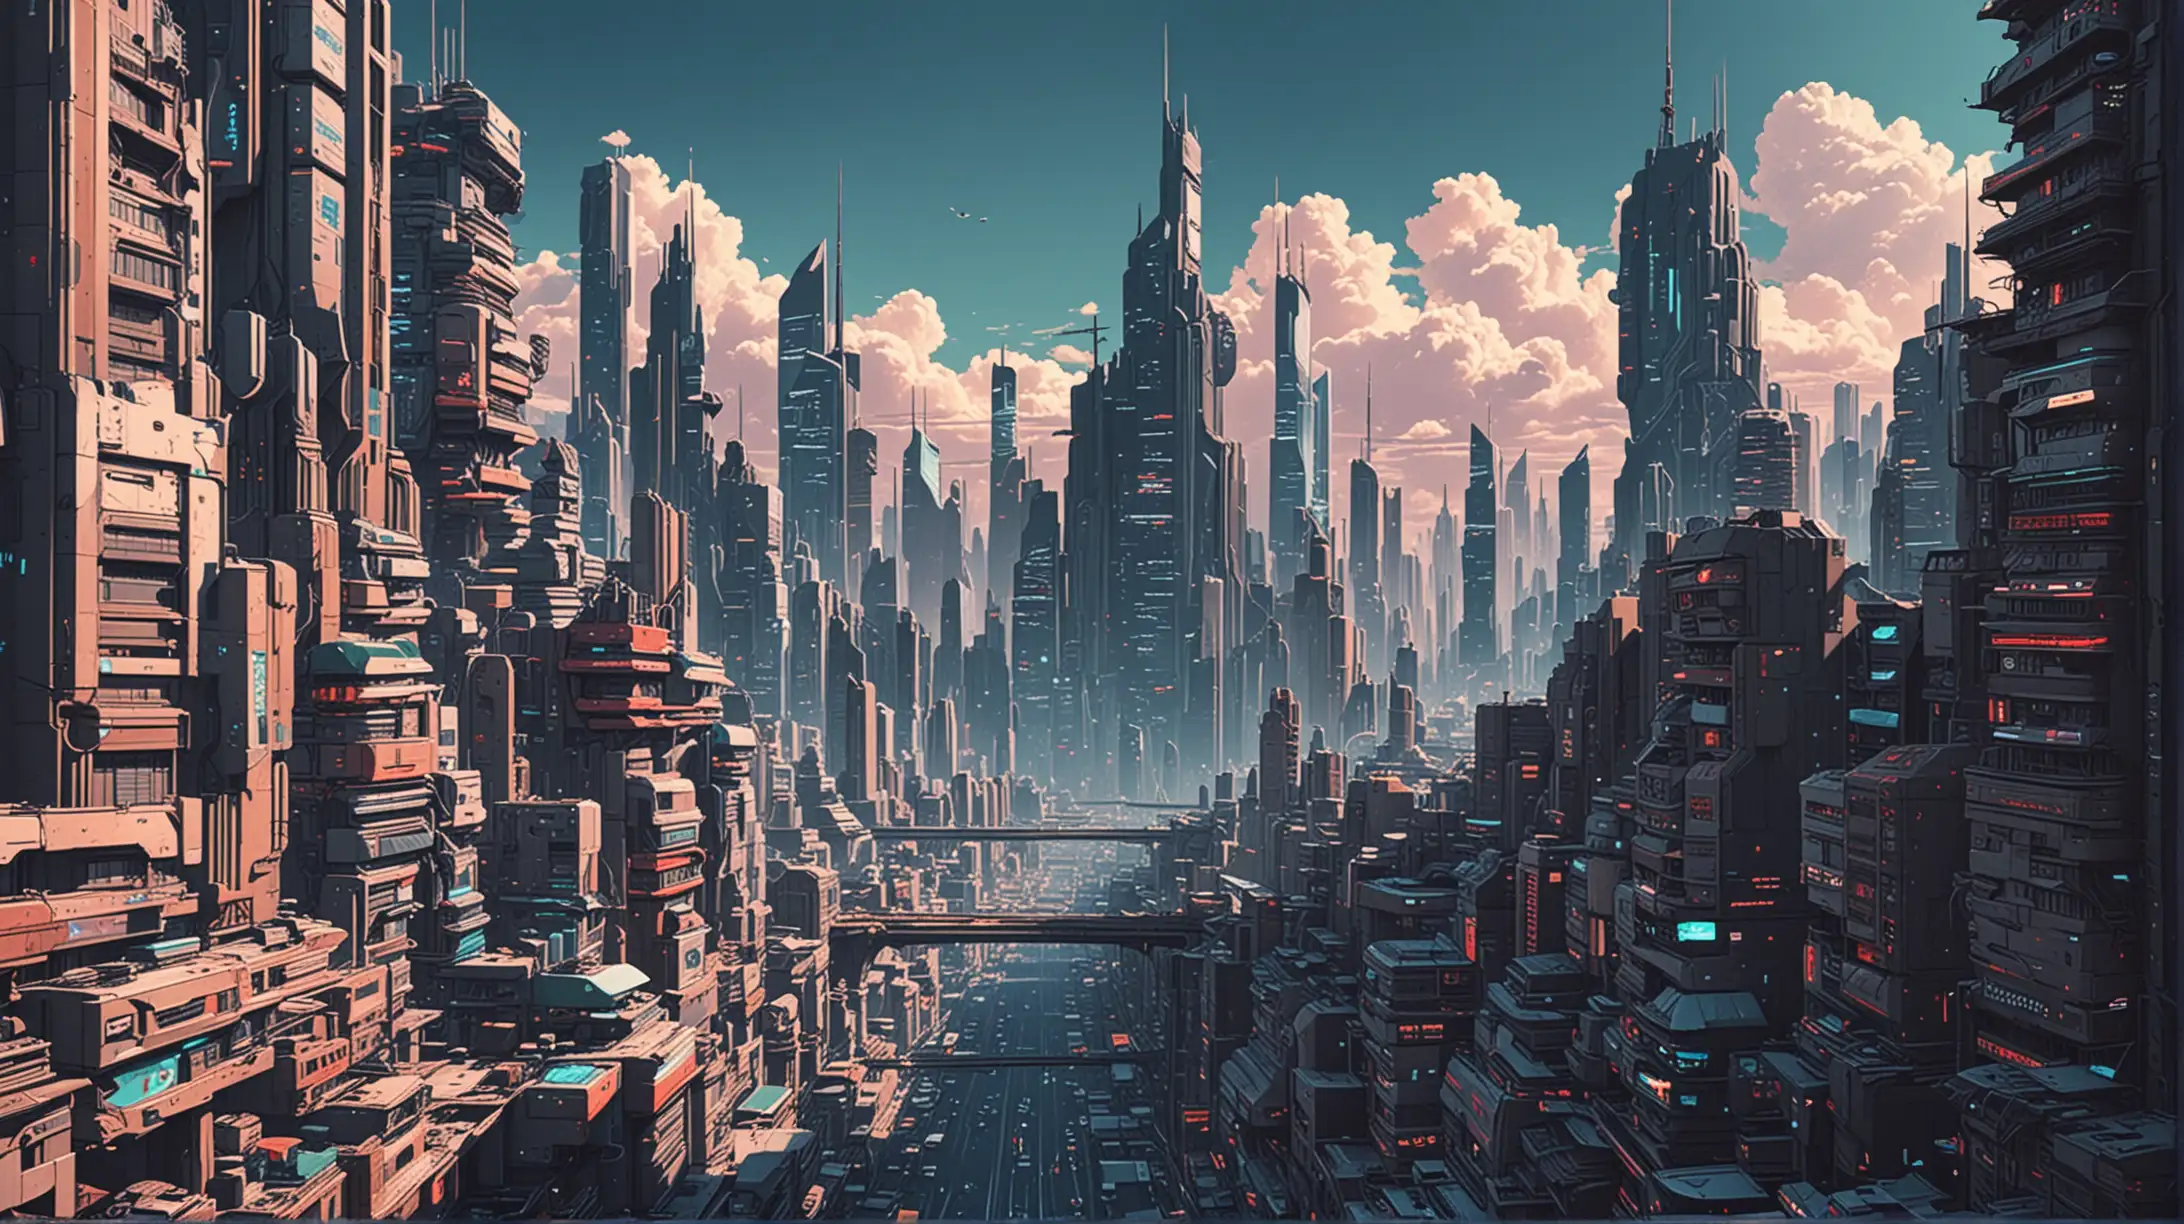 Futuristic Cityscape in 90s Anime Style Cyberpunk Metropolis with Neon Lights